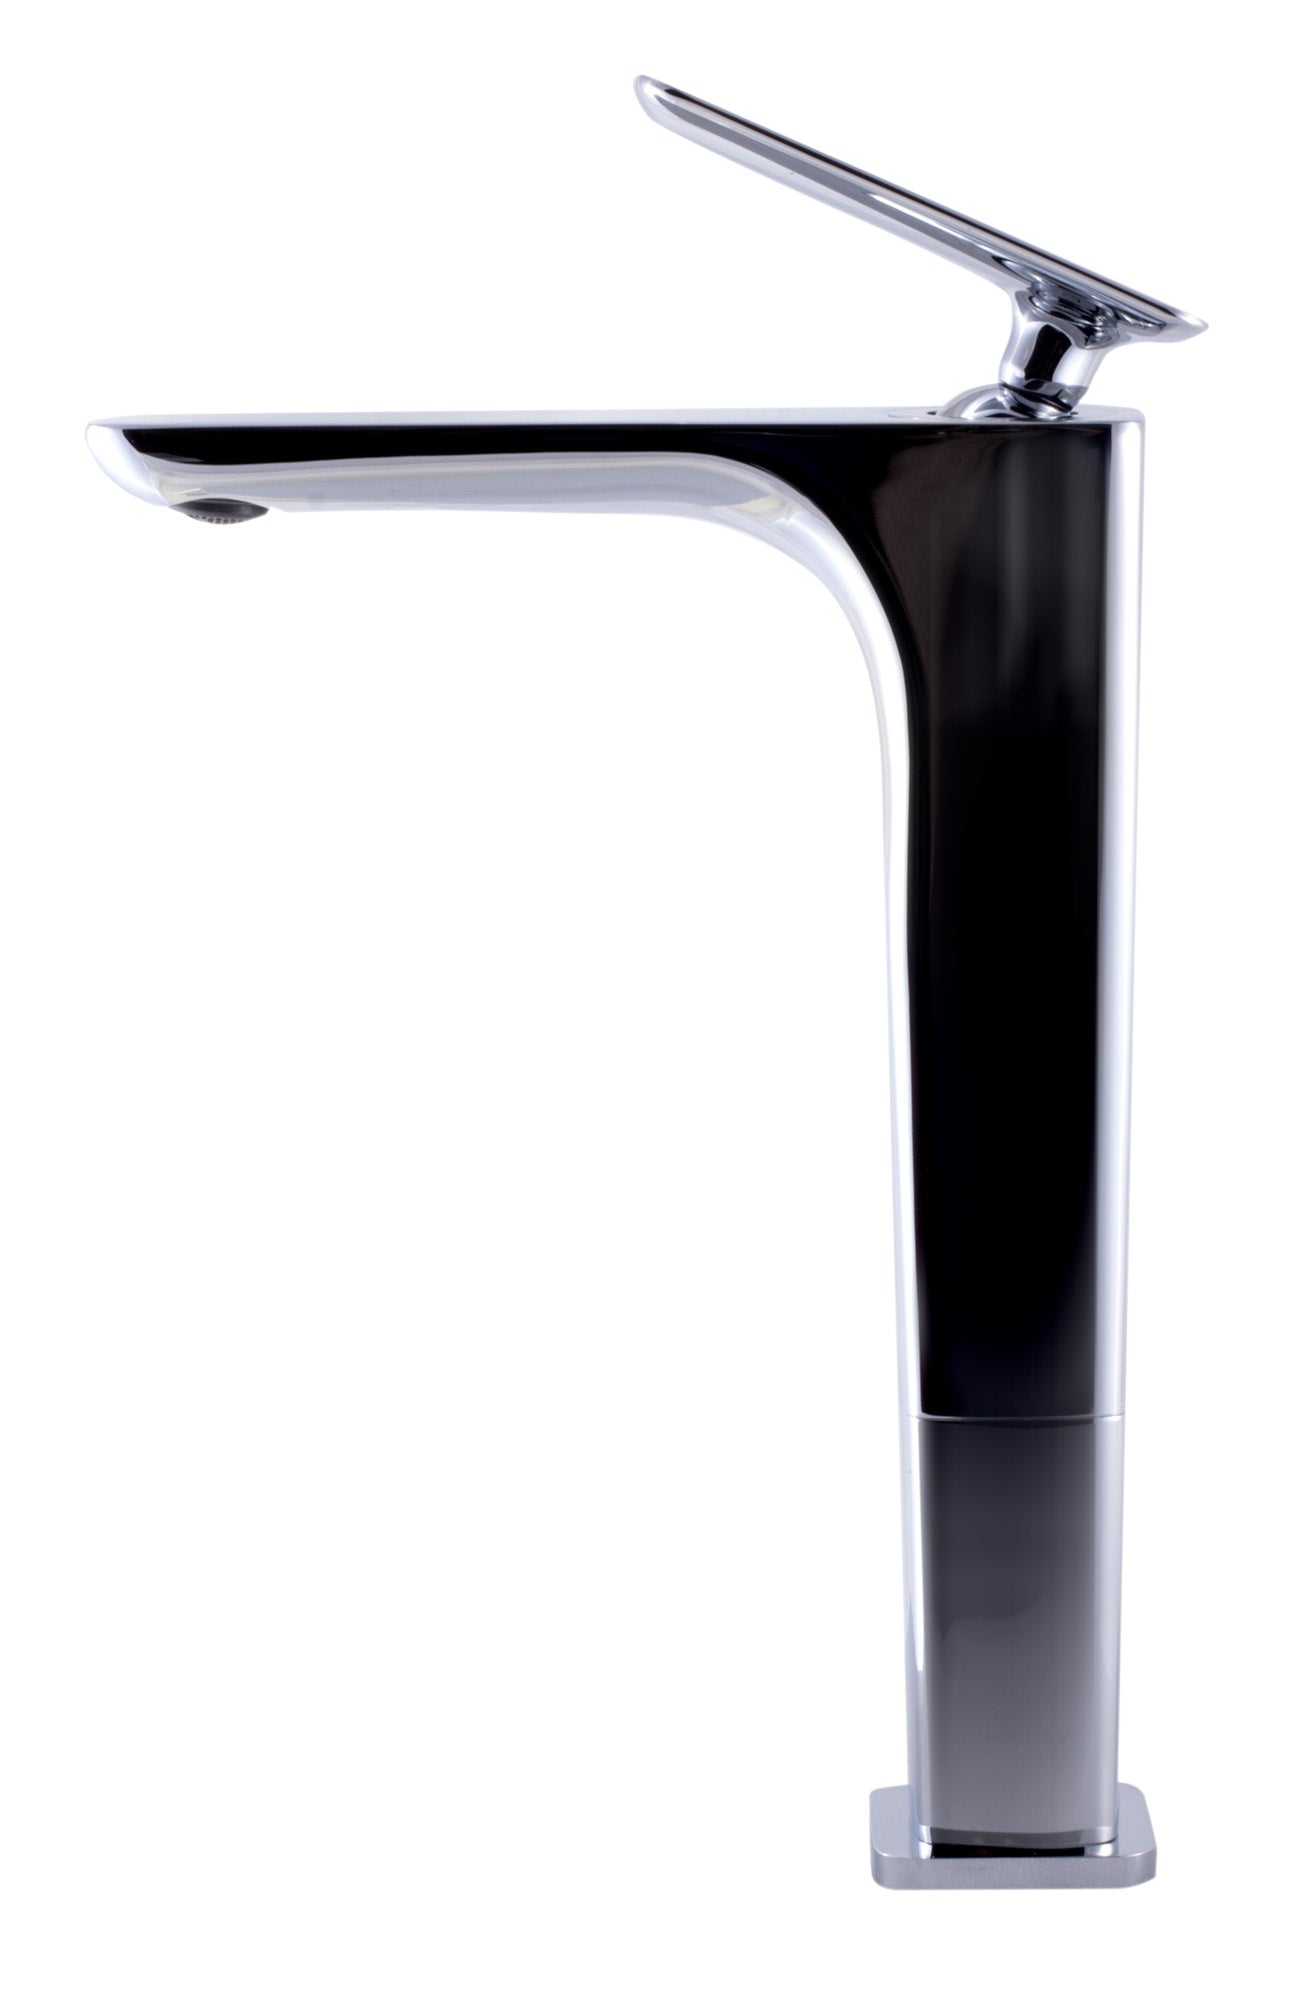 ALFI AB1778 Bathroom Faucet Tall Single Hole Modern Style